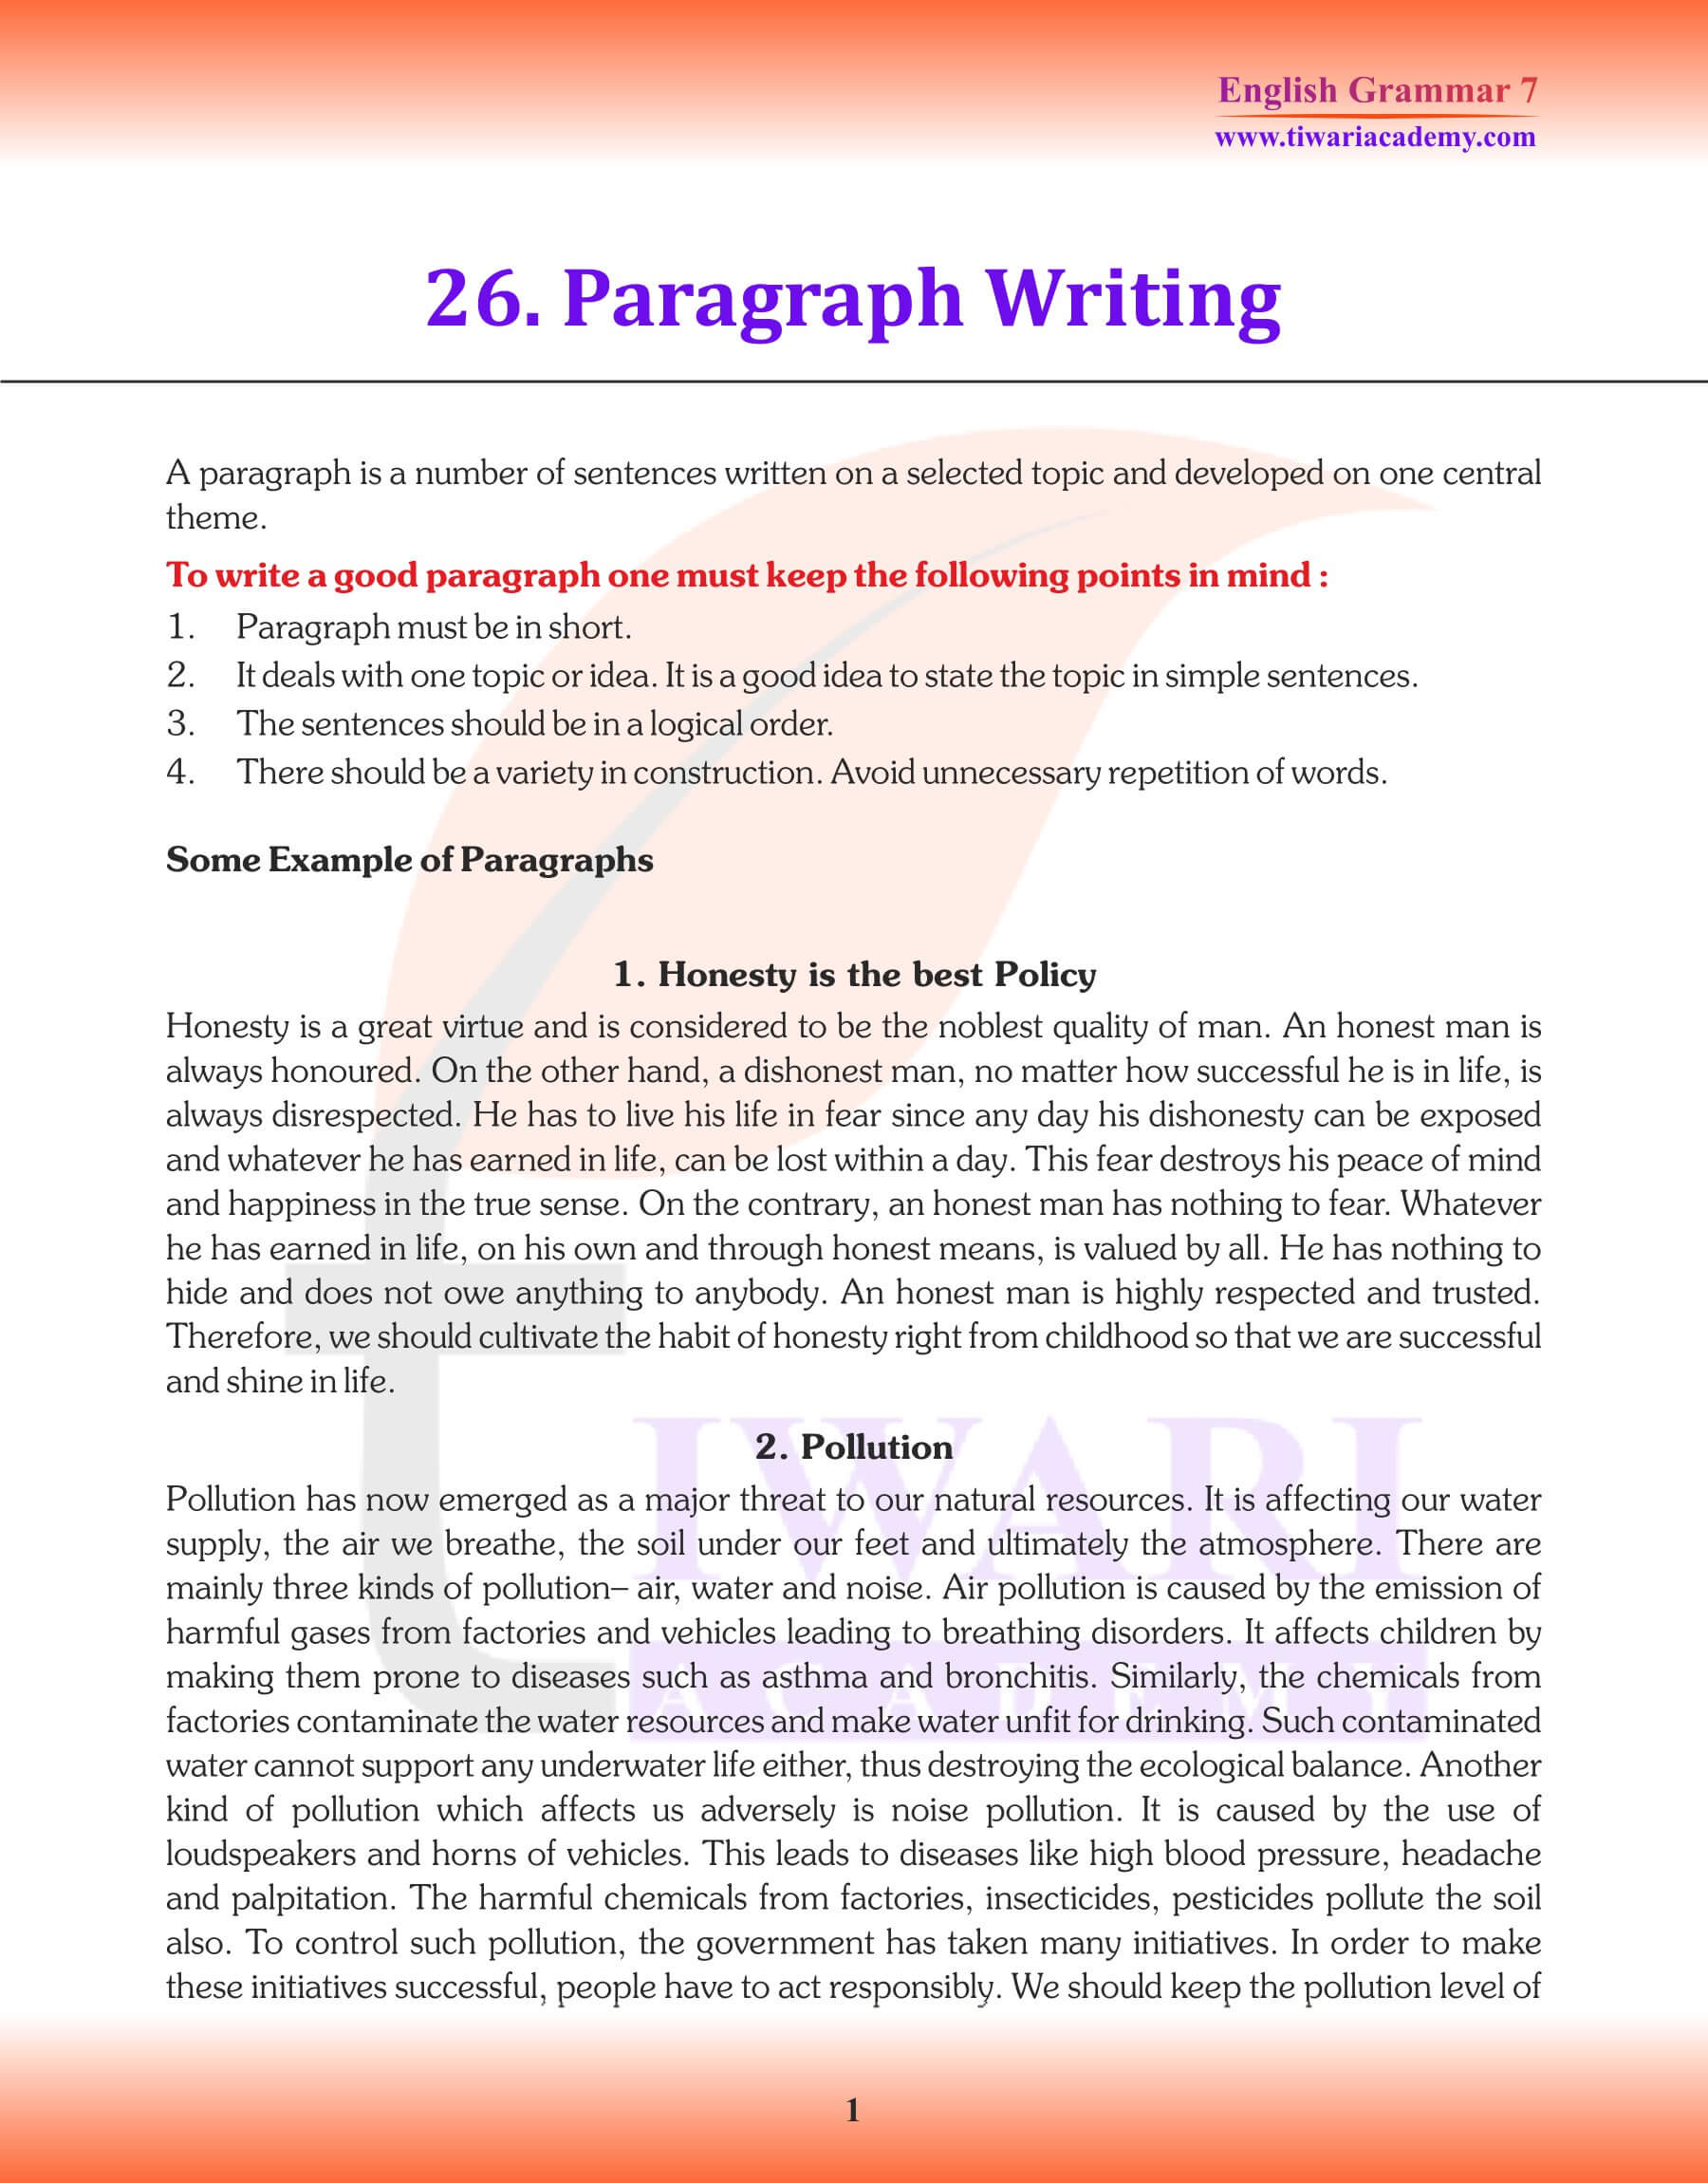 Class 7 Grammar for Paragraph Writing